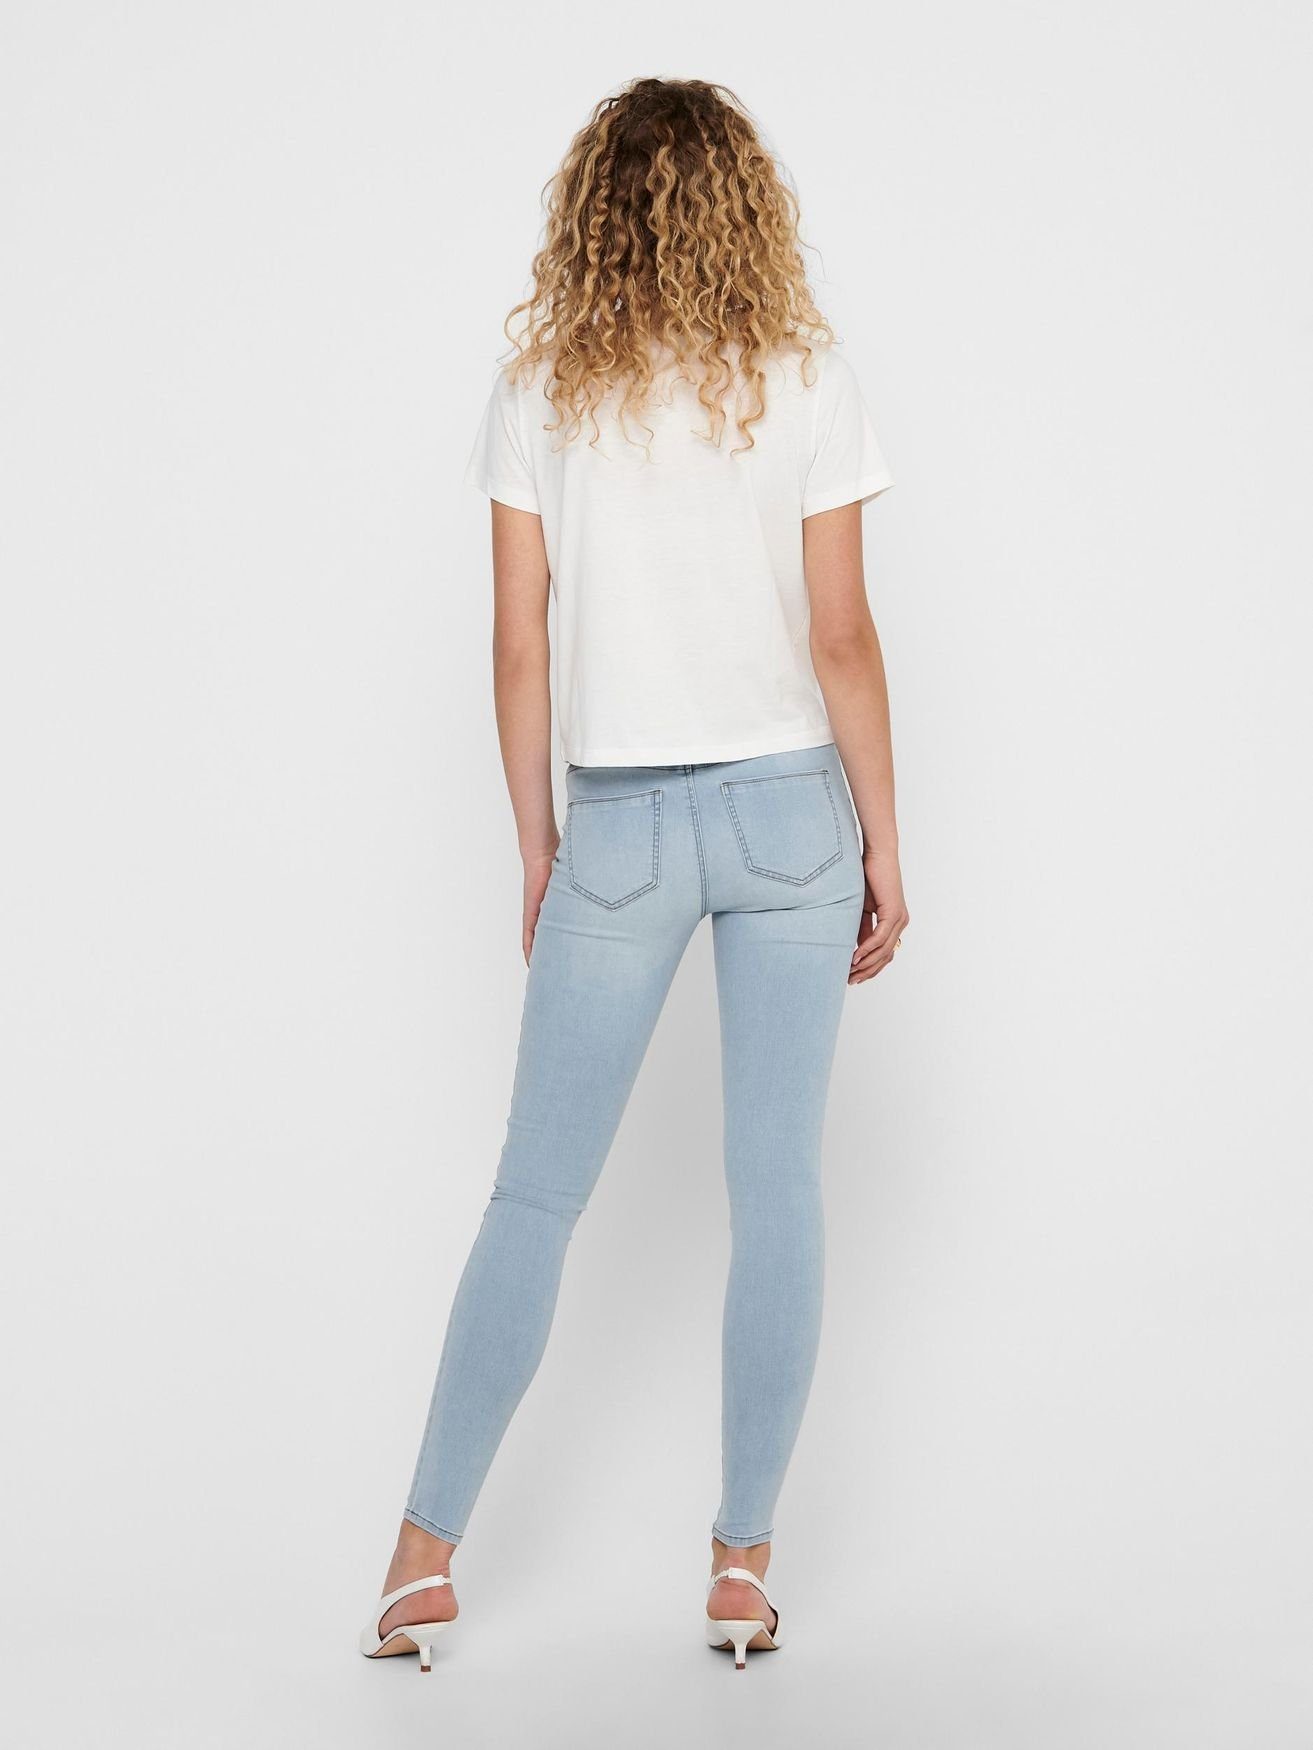 Fit Regular Jeans Stretch Skinny ONLY Hose in Blau Waist 4754 Denim ONLWAUW Skinny-fit-Jeans